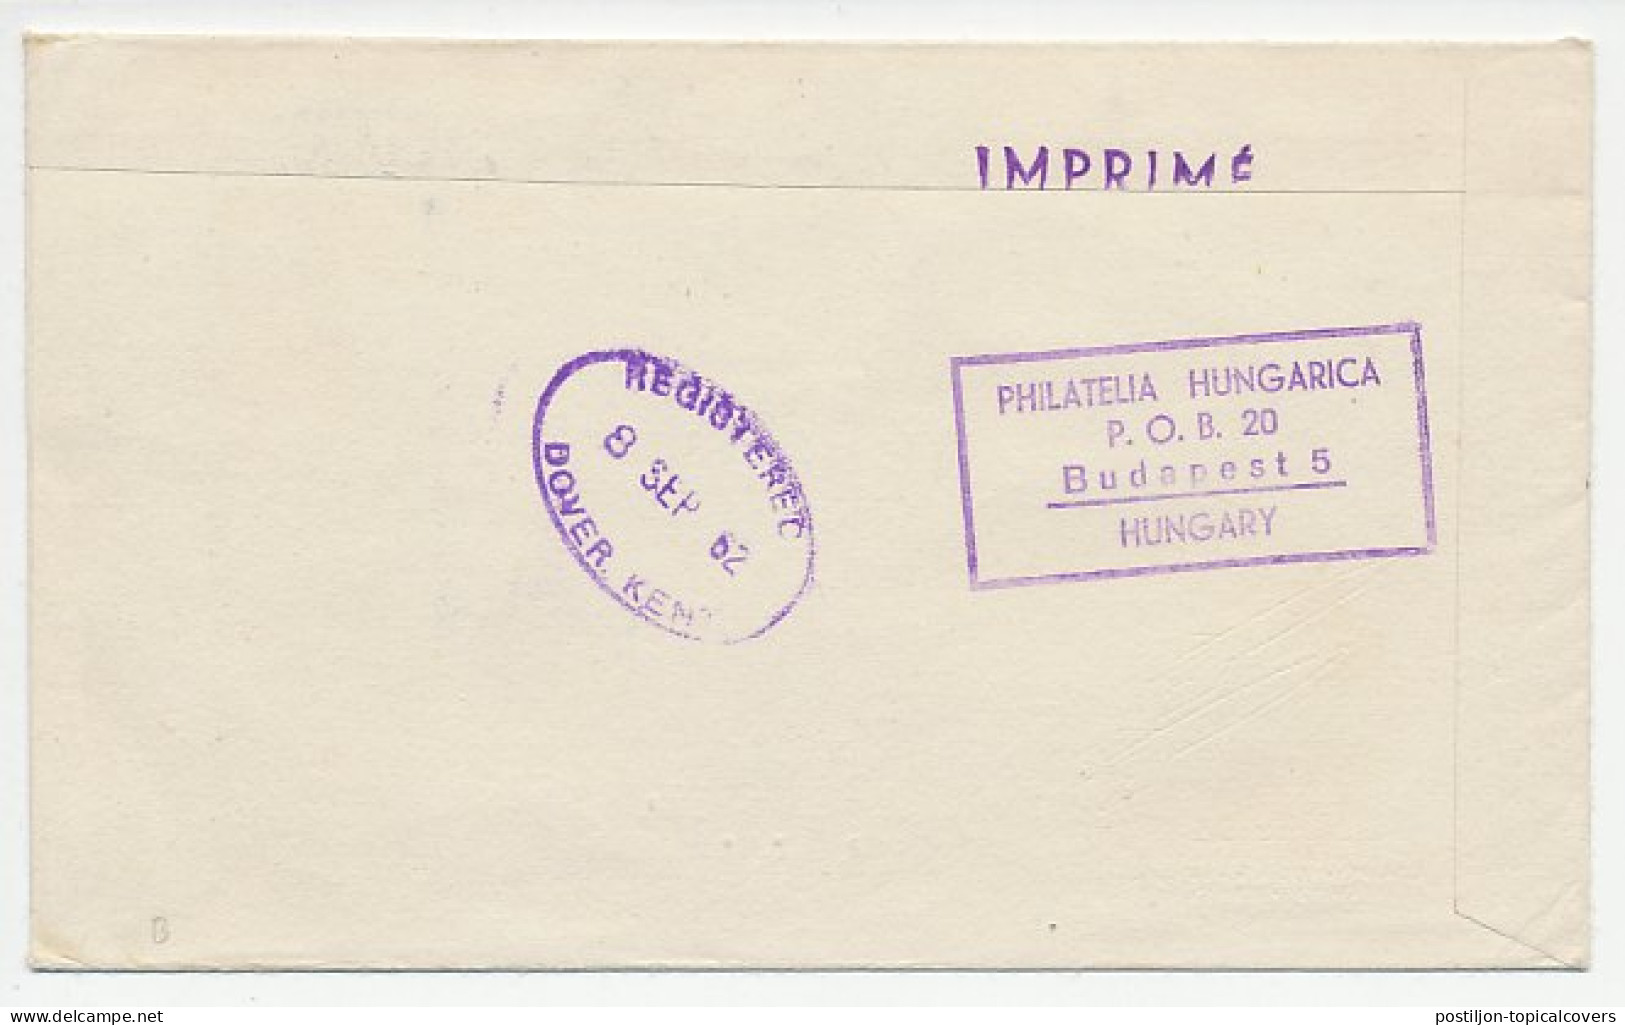 Registered Cover / Postmark Rumania 1962 Spaceship - Wostok 3 / 4 - Astronomy